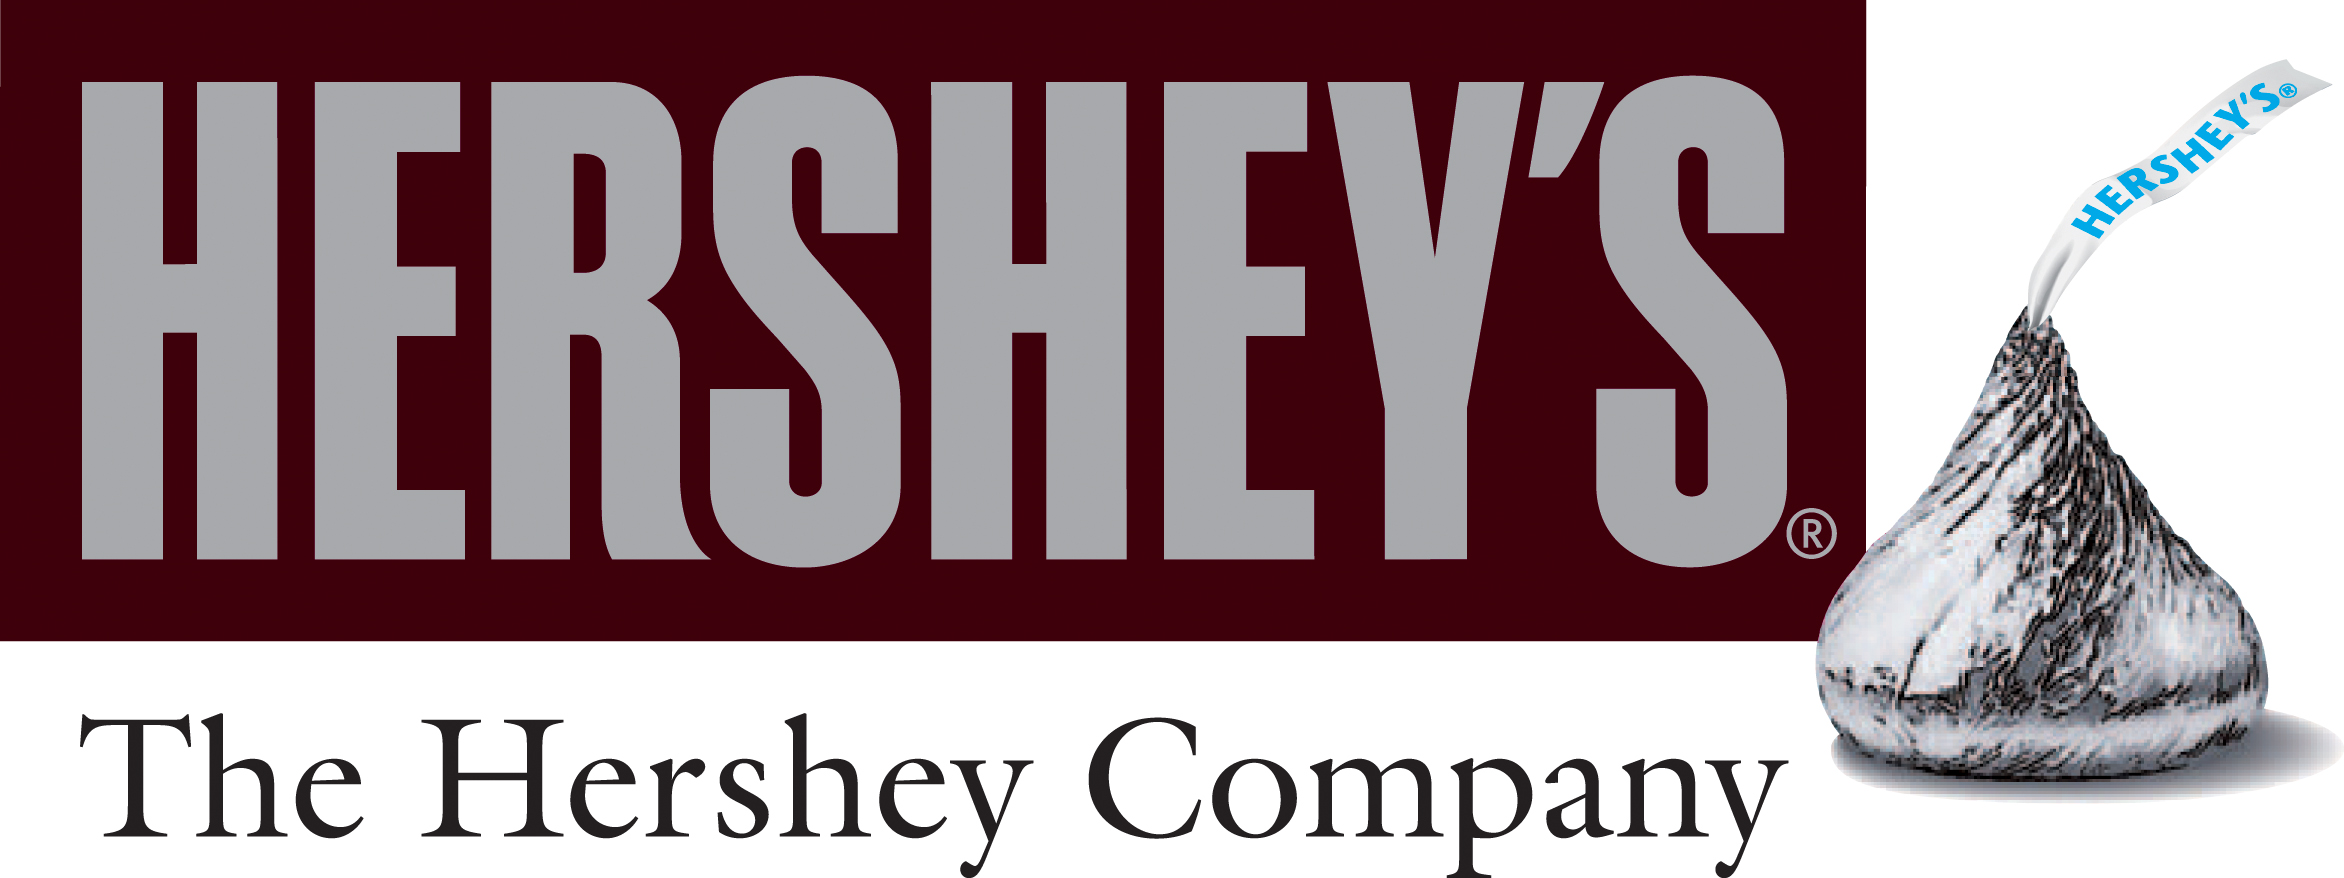 Hershey-Logo.png